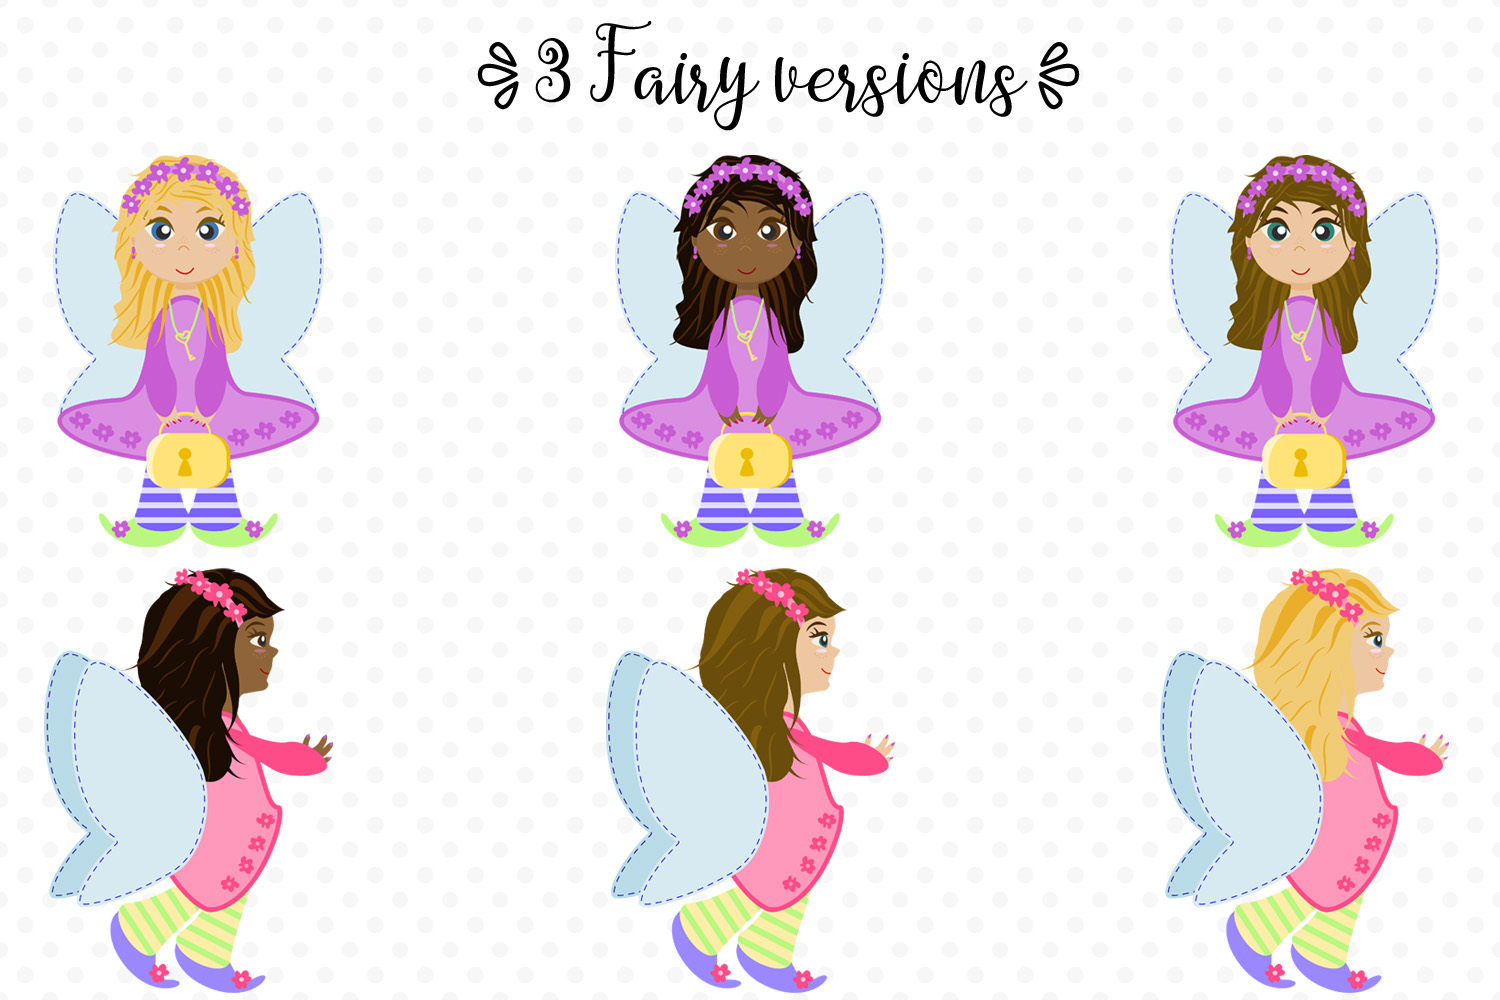 Fairy Secrets - Graphics and P